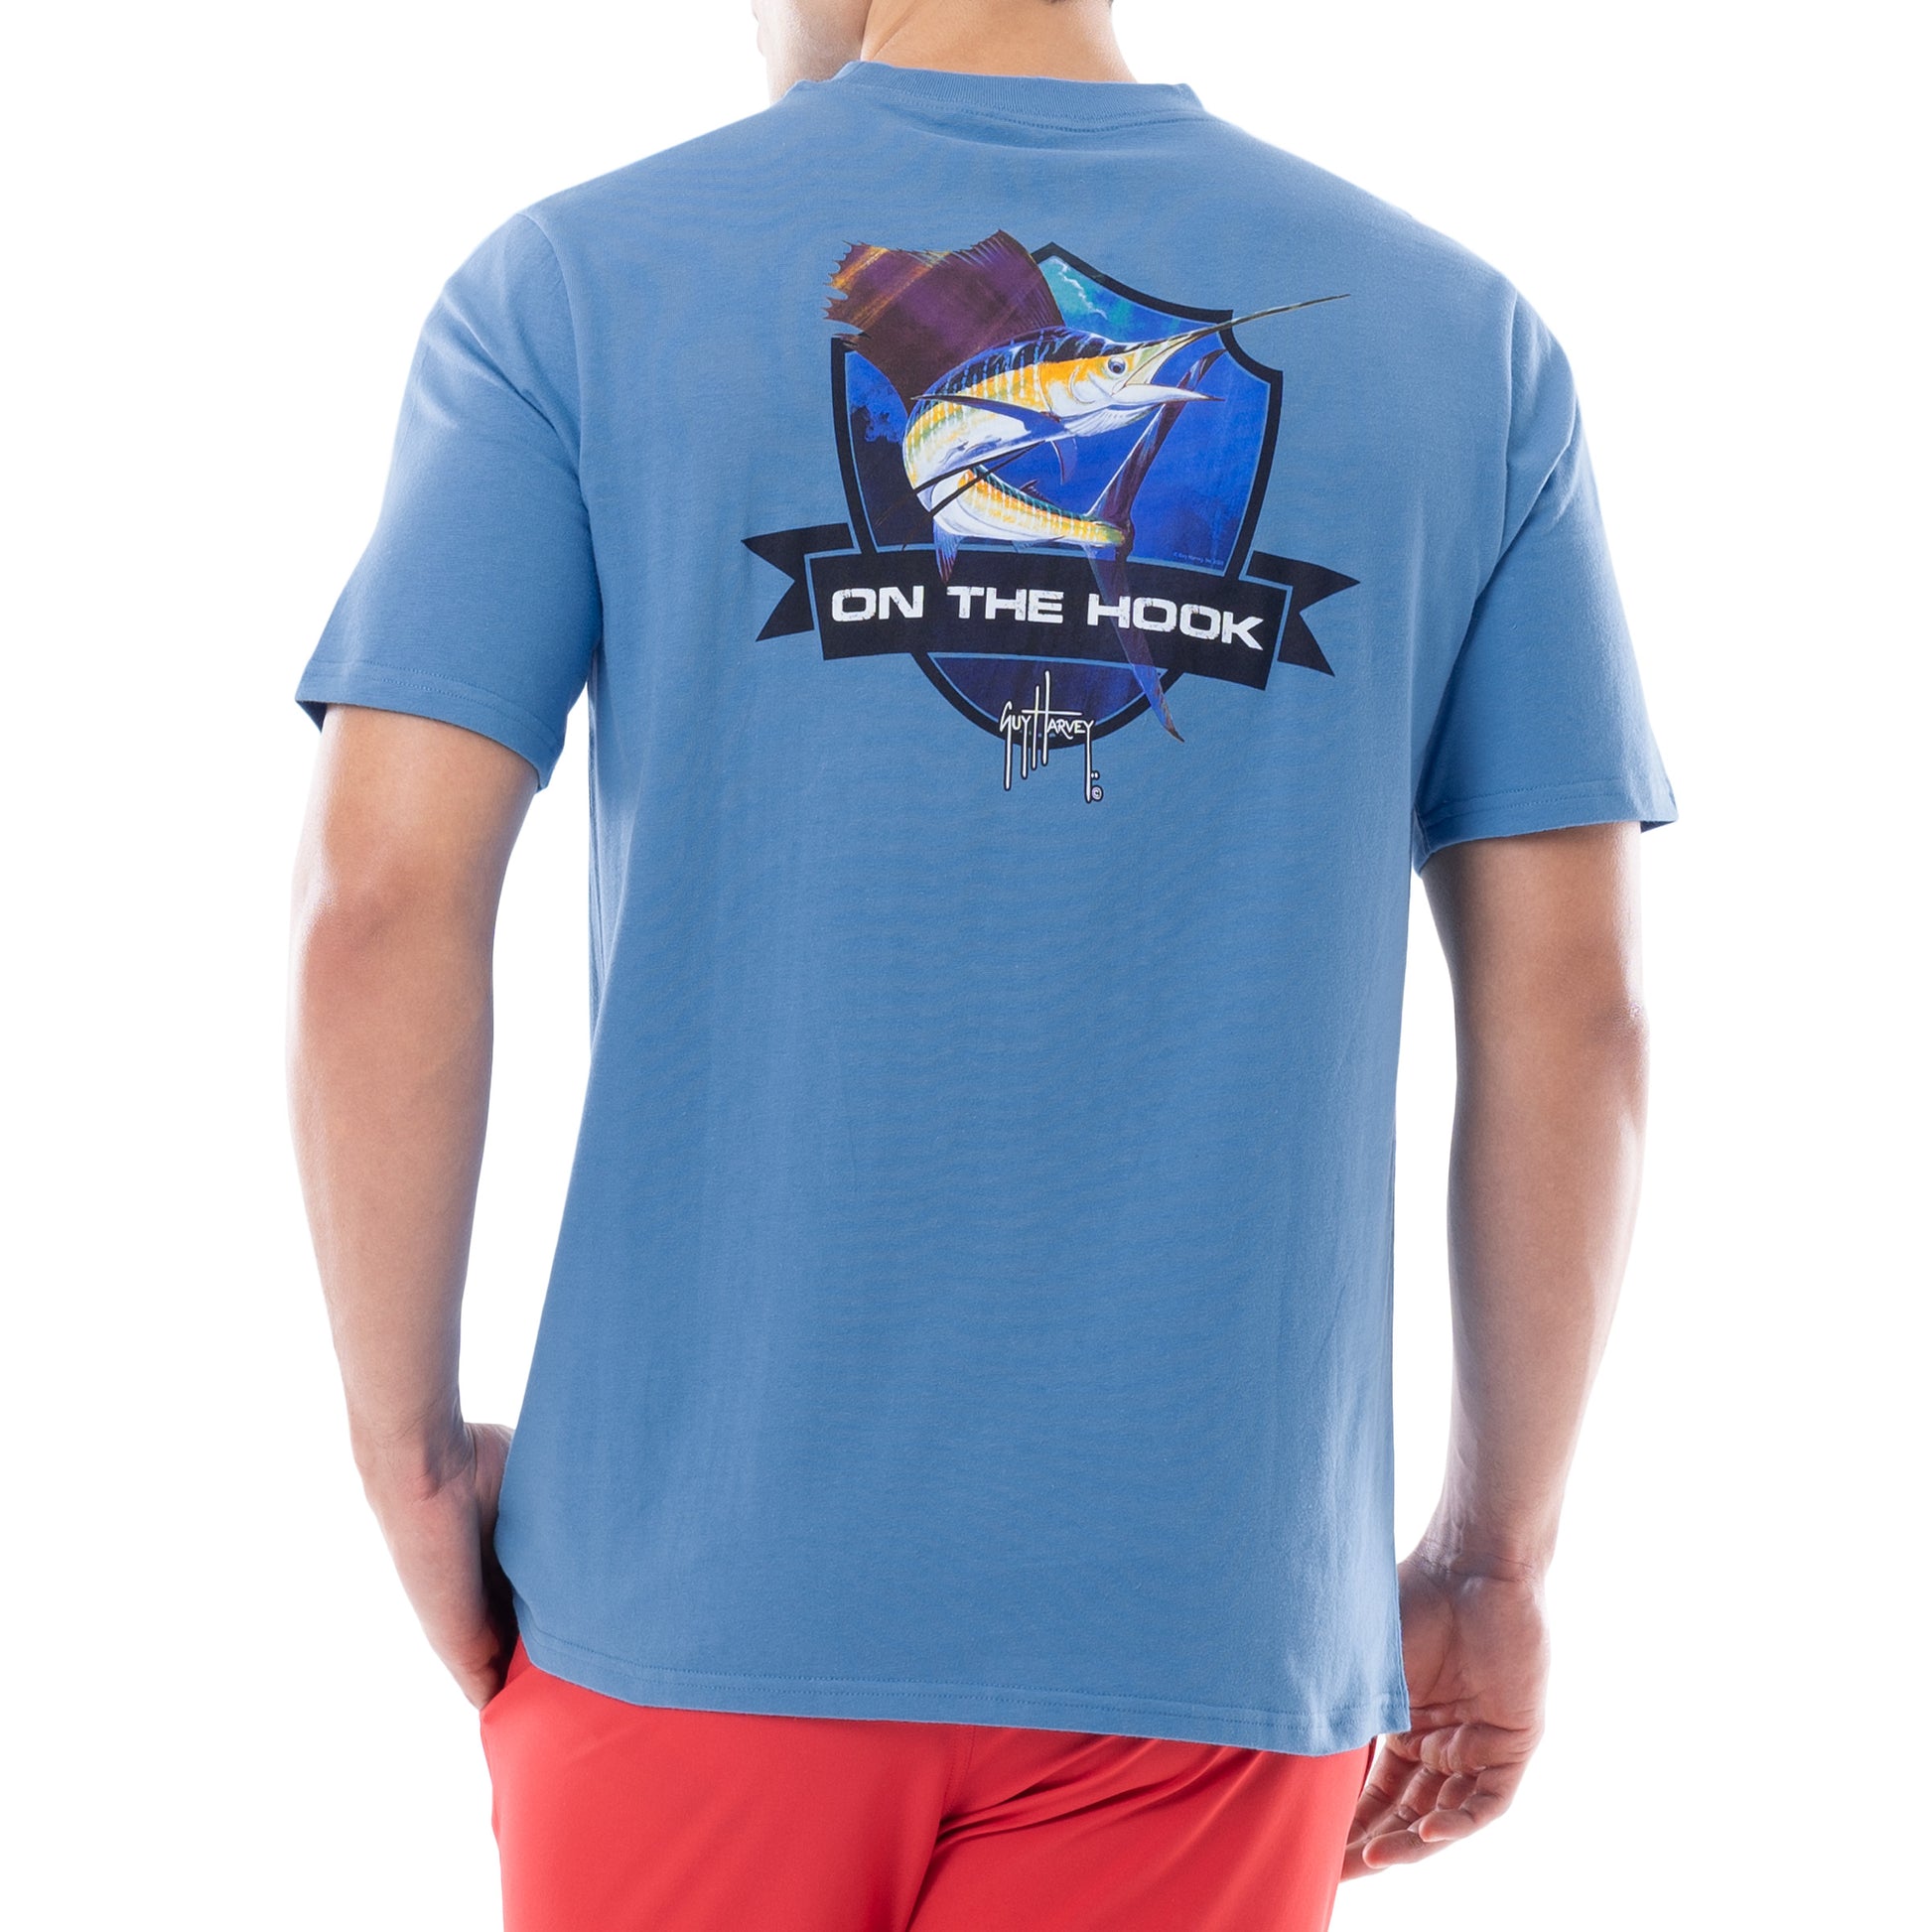 fishing huk T-shirt Design' Men's T-Shirt | Spreadshirt